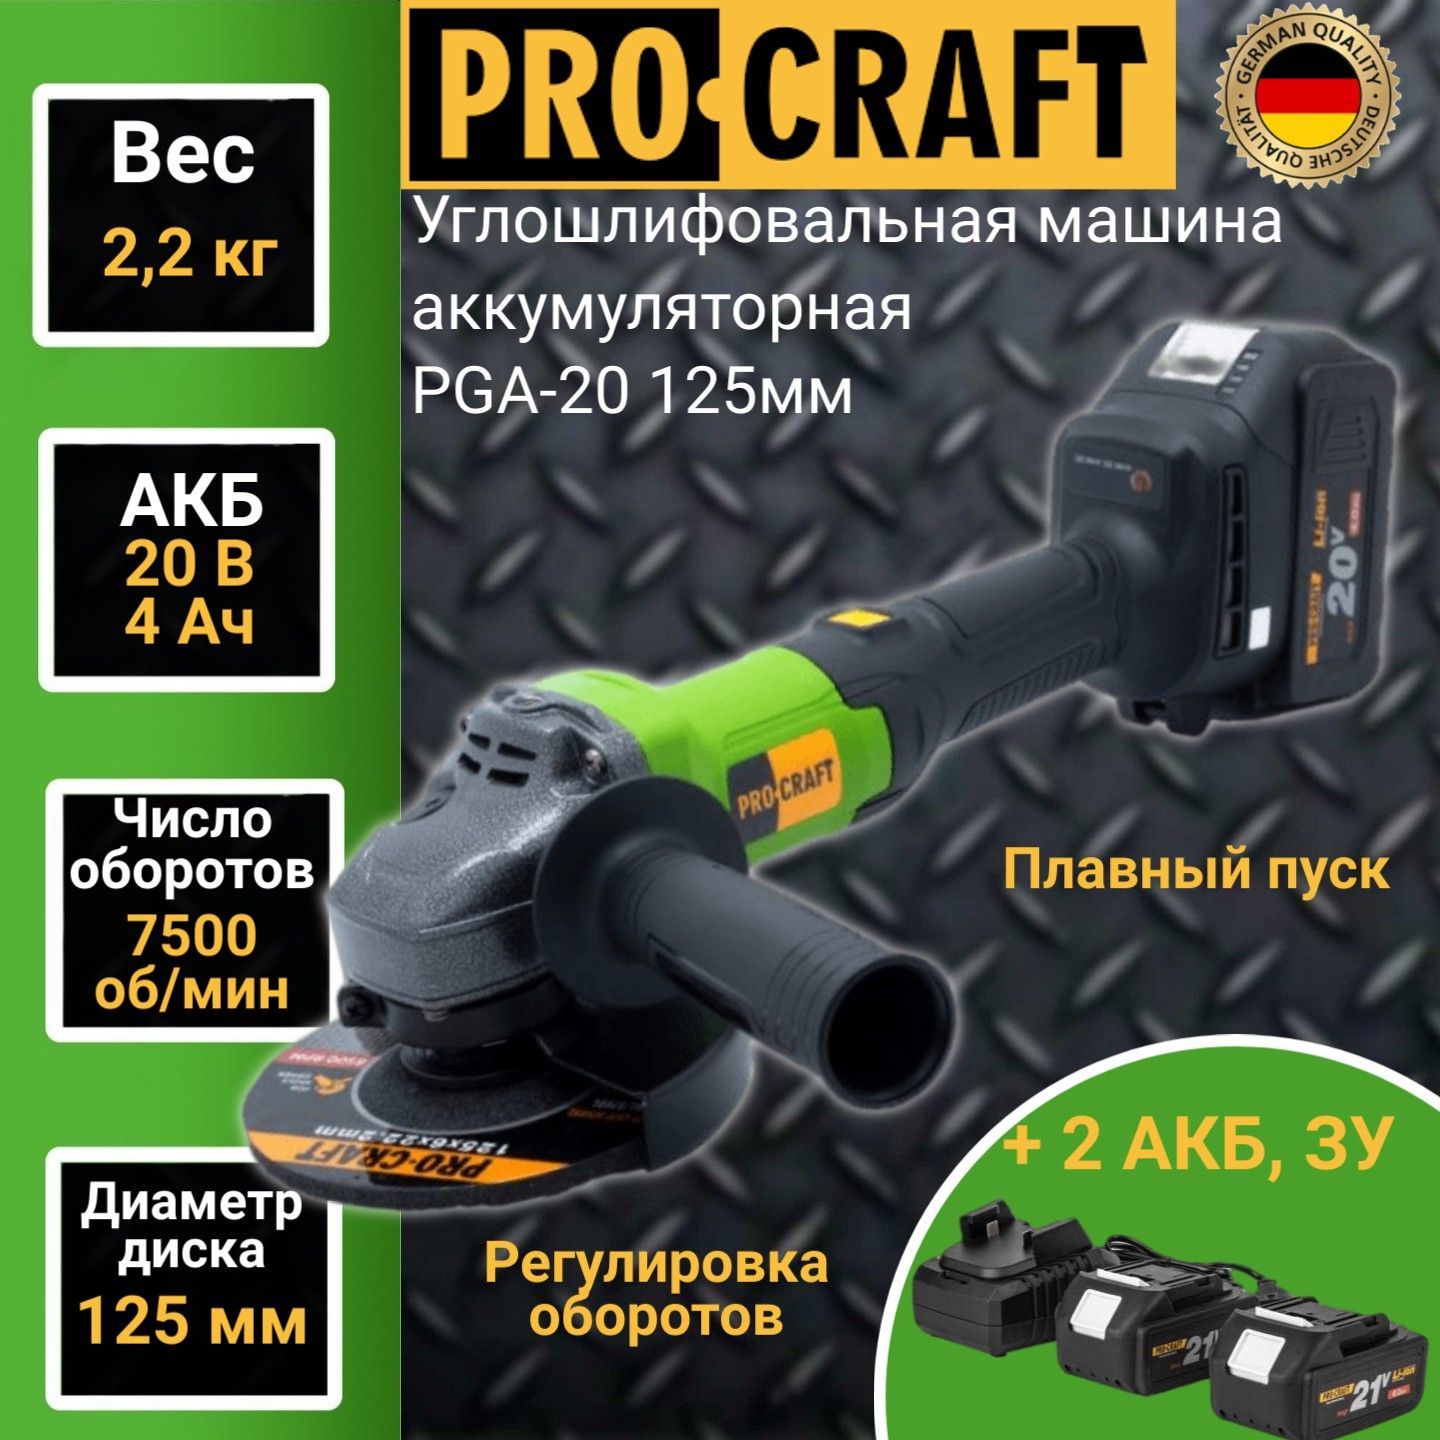 Углошлифовальная машина болгарка аккумуляторная ProСraft PGA-20, 125мм круг, 2 АКБ+ЗУ, болгарка ушм пкб арма